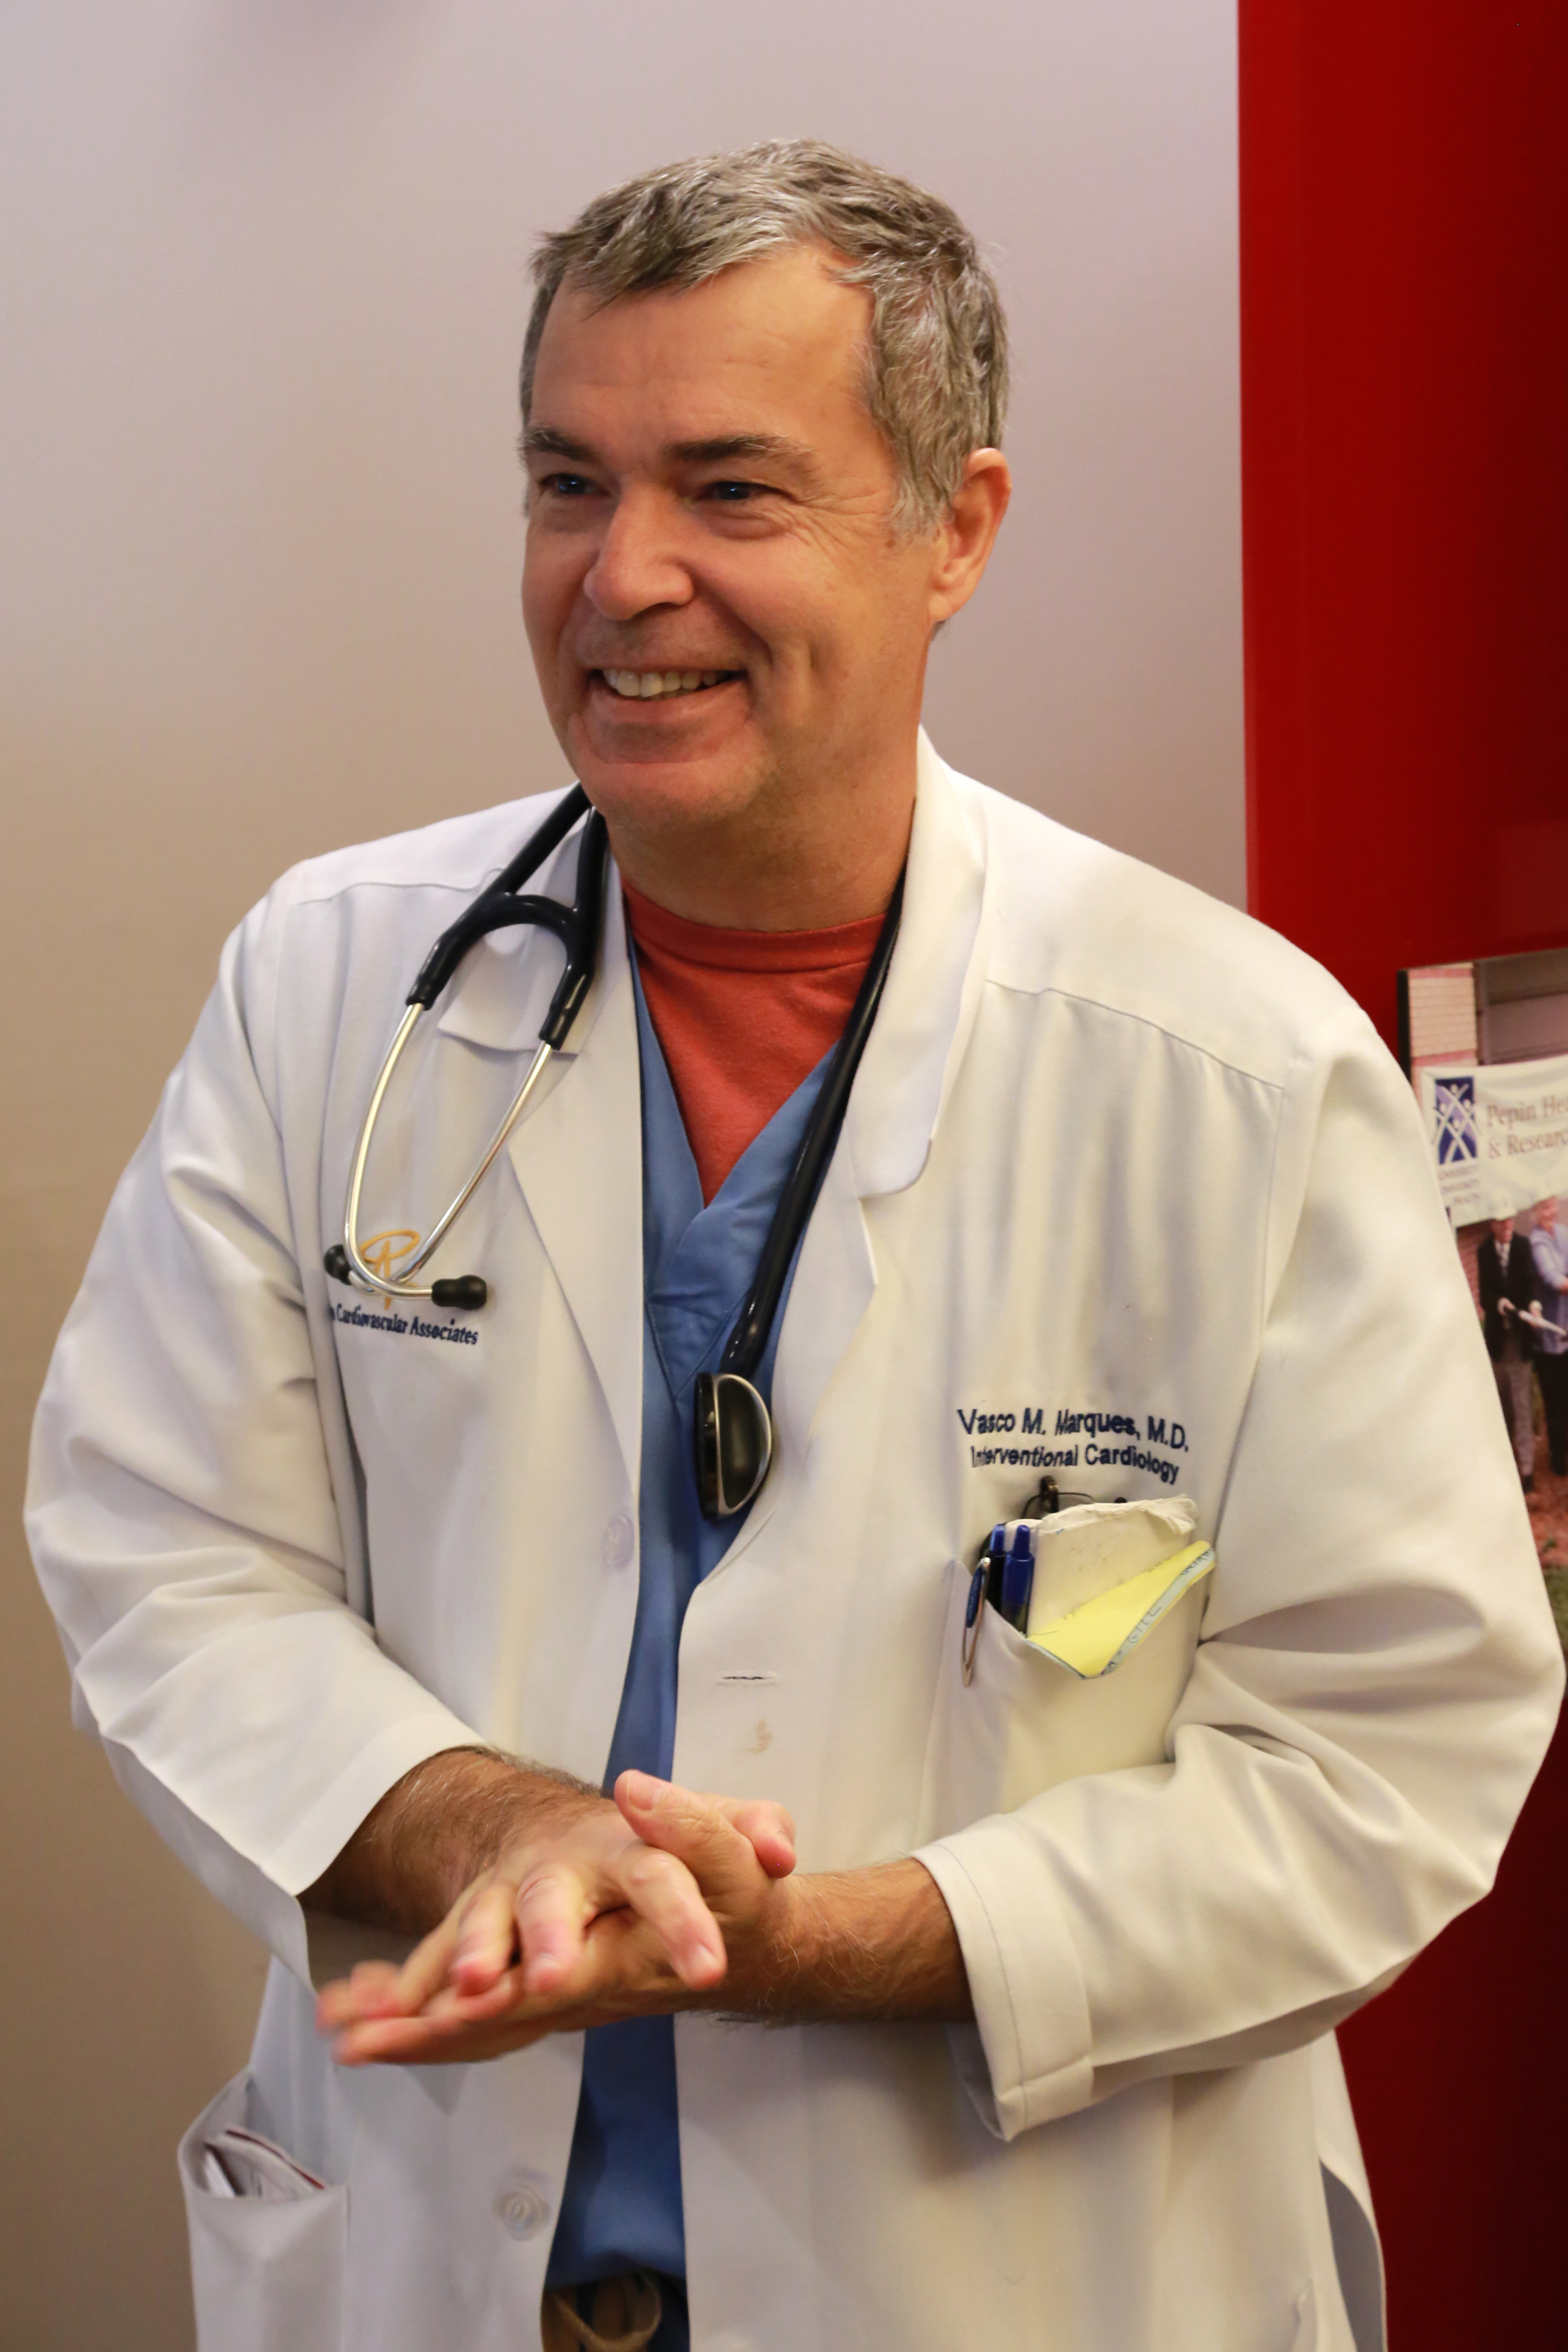 Dr. Vasco Marques